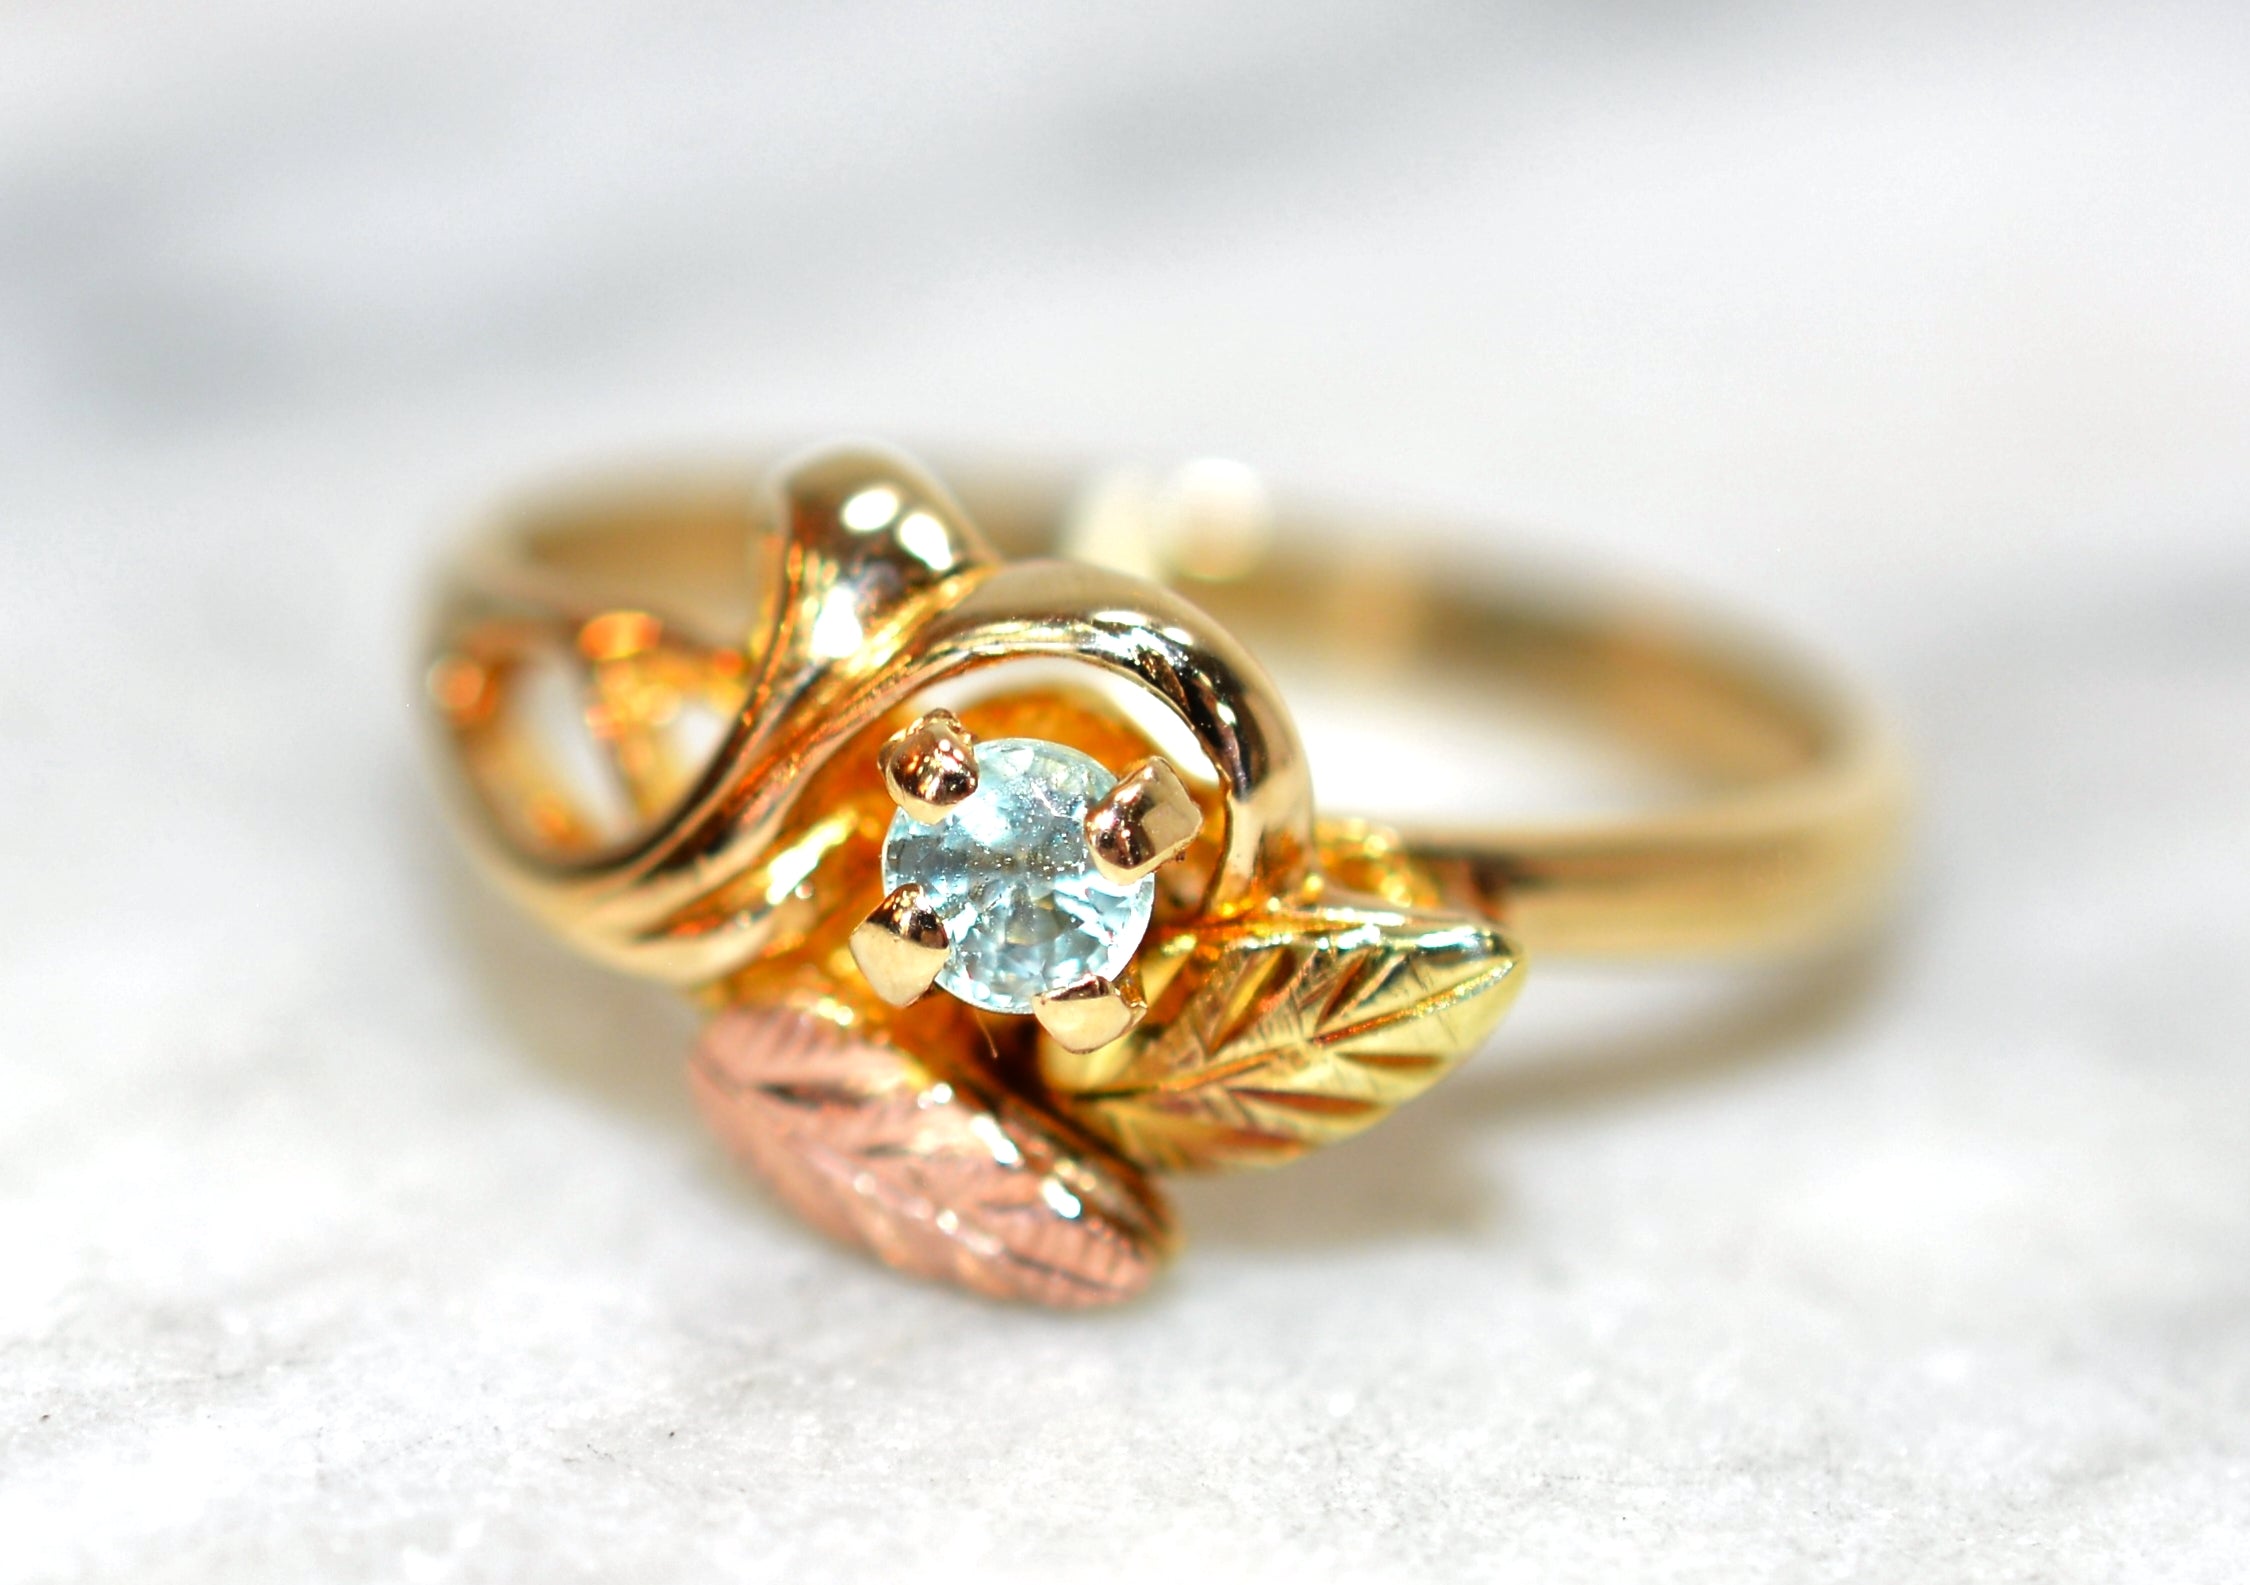 Natural Paraiba Tourmaline Ring 10K Solid Gold .10ct Black Hills Gold Ring Black Hills Dakota Jewelry Solitaire Ring Vintage Estate Jewelry